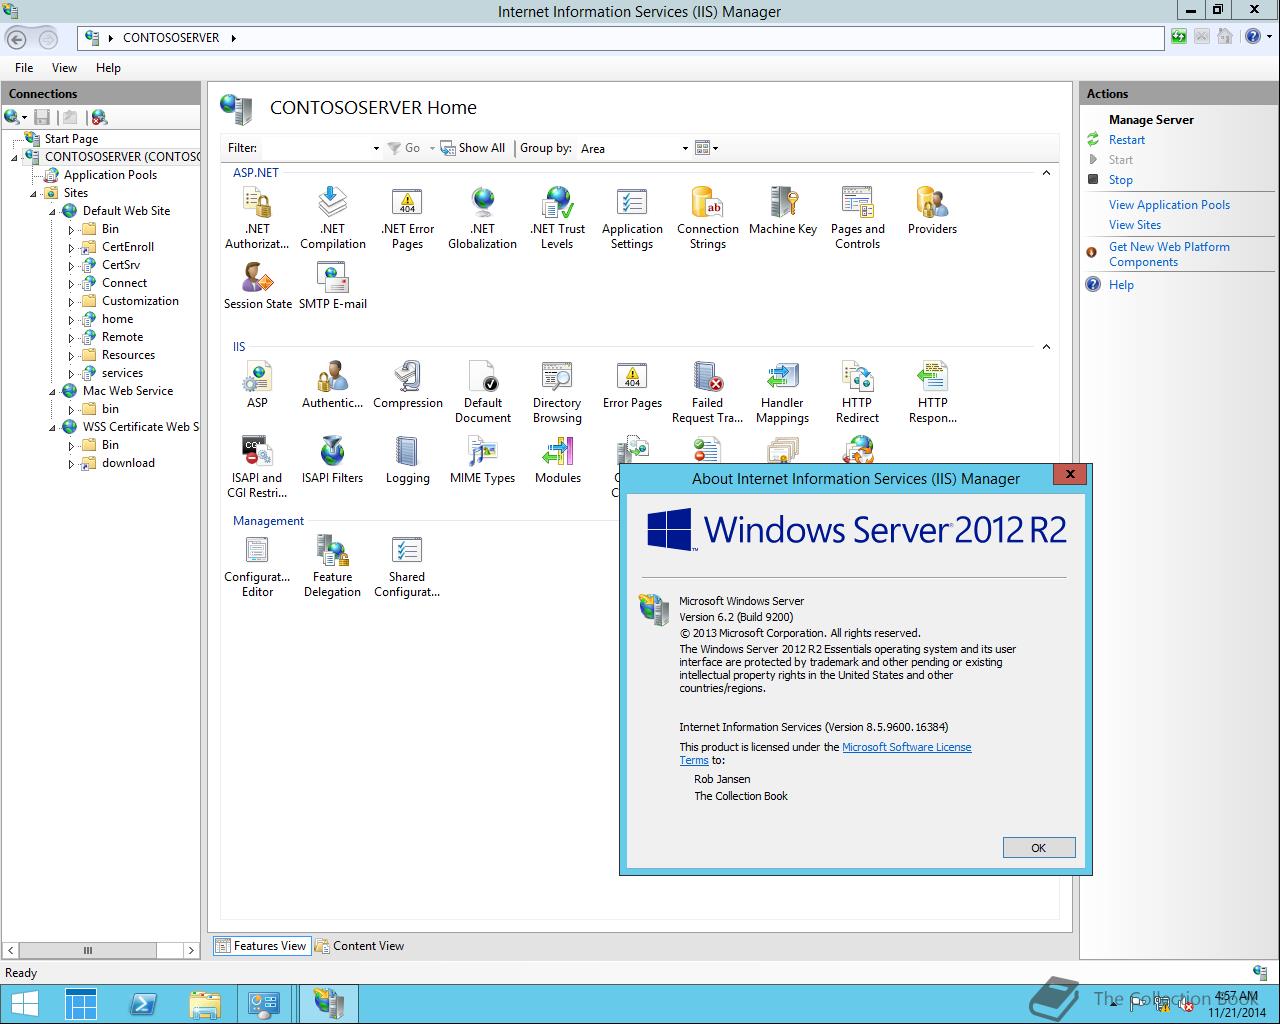 Microsoft Windows Server 2012 R2 Essentials 63960017415 The Collection Book 6186